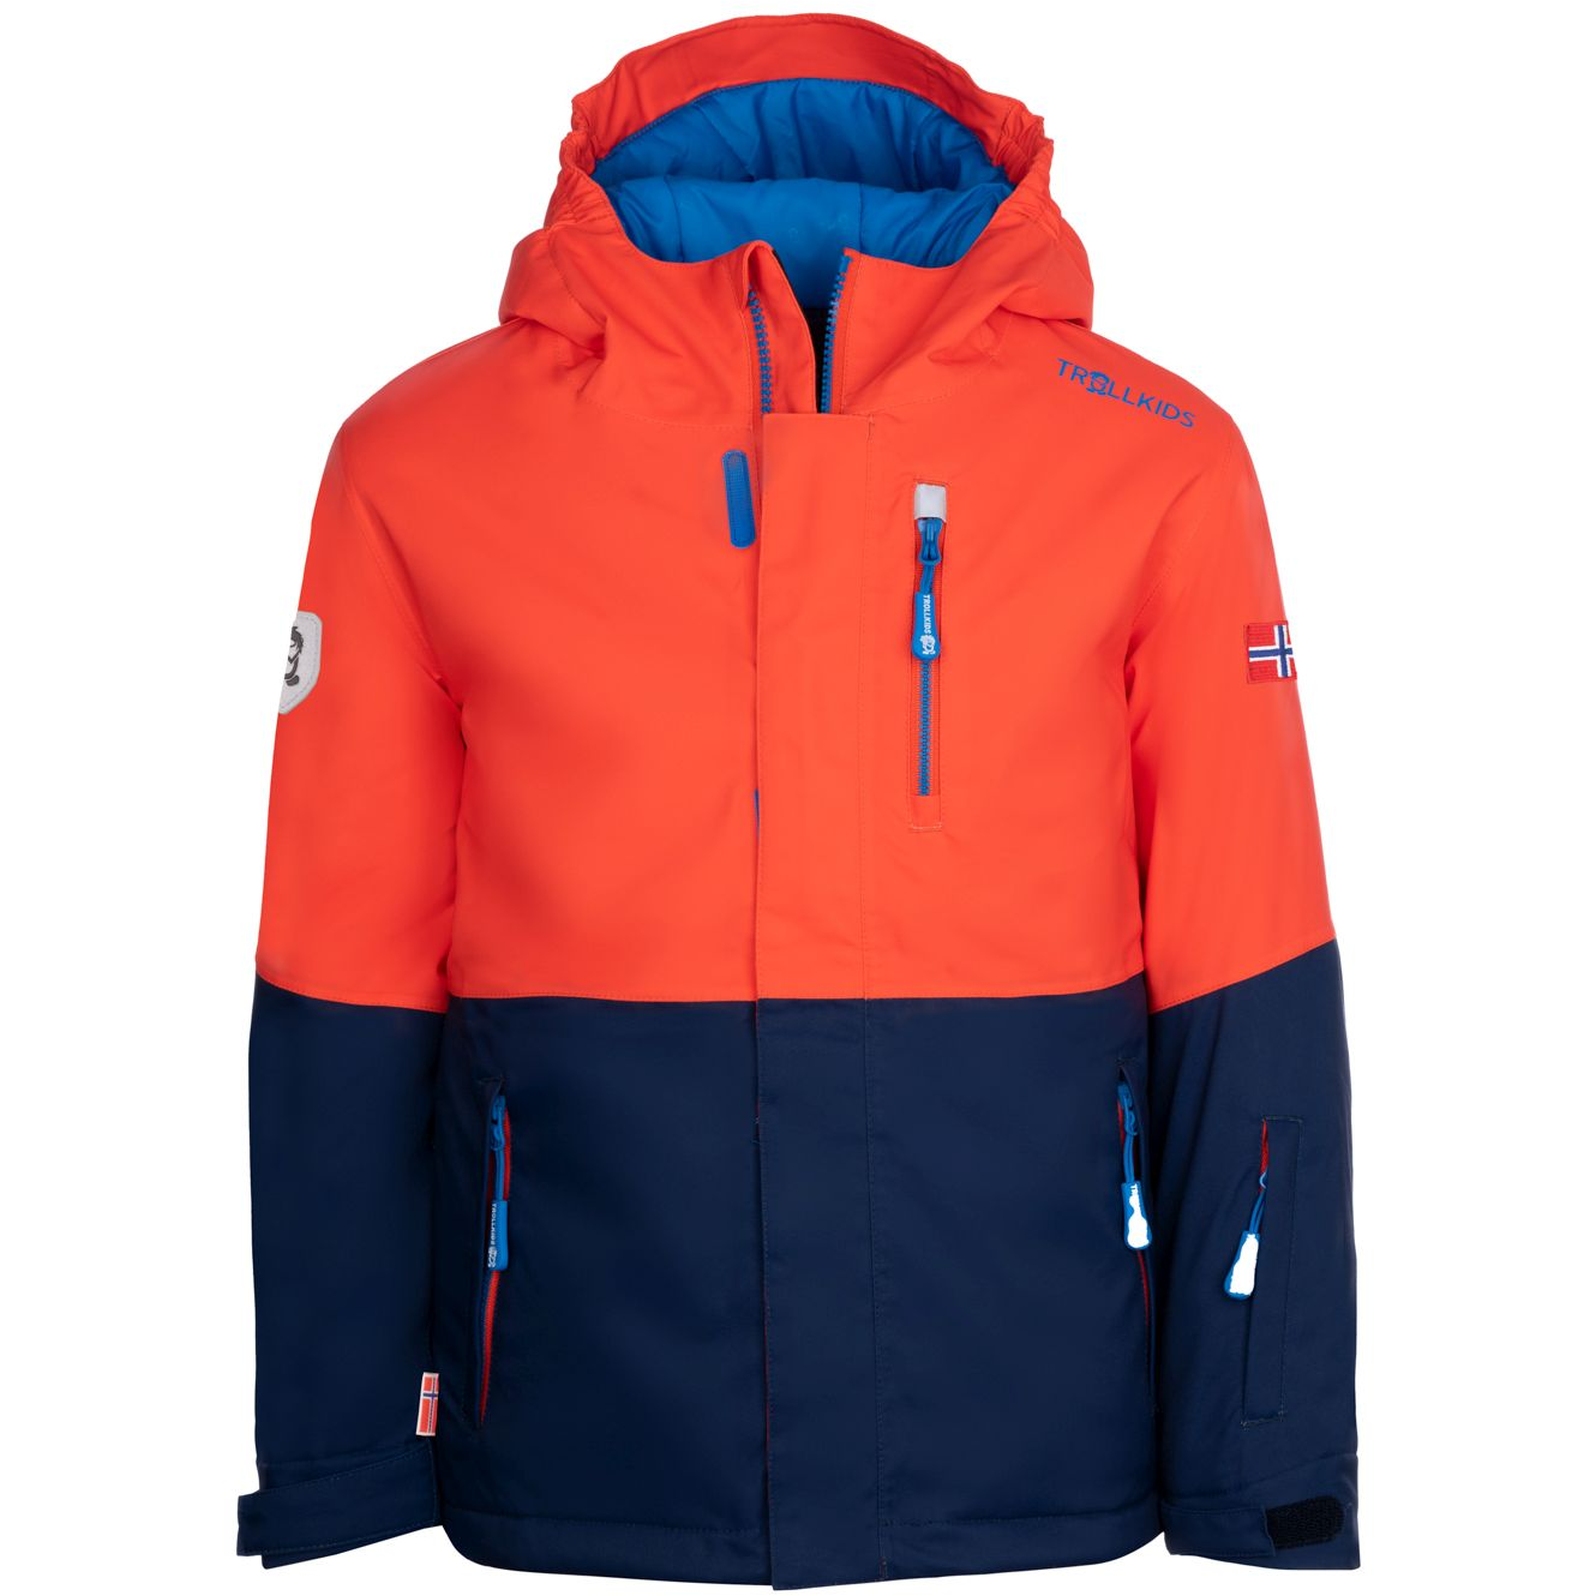 Productfoto van Trollkids Hallingdal Ski Jacket Kids - Flame Orange/Navy